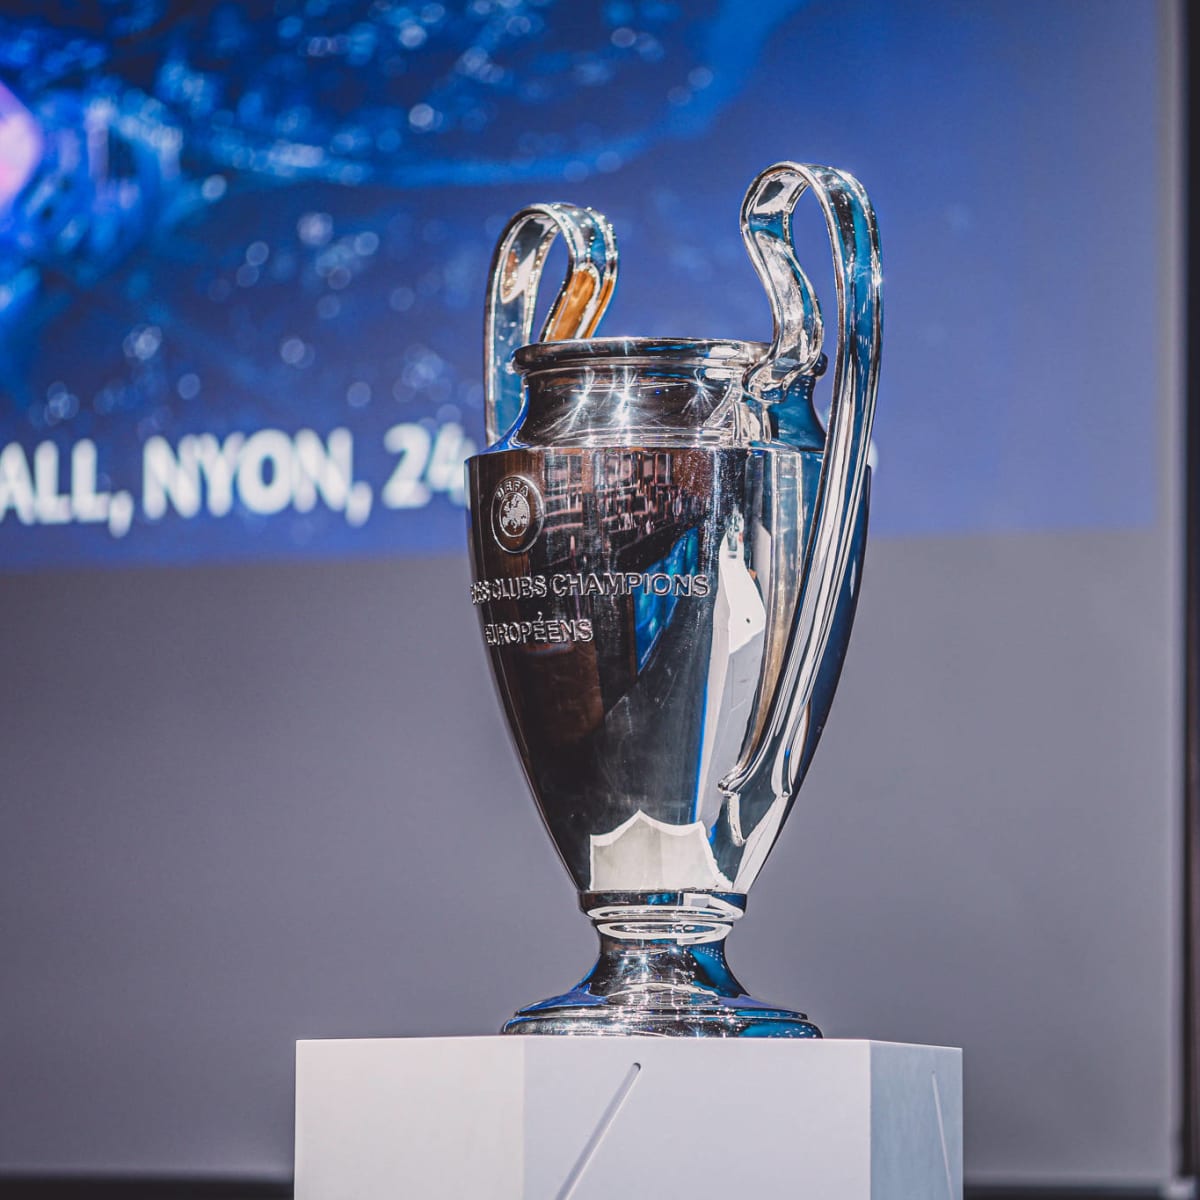 Champions League group stage draw: Pot 3, UEFA Champions League